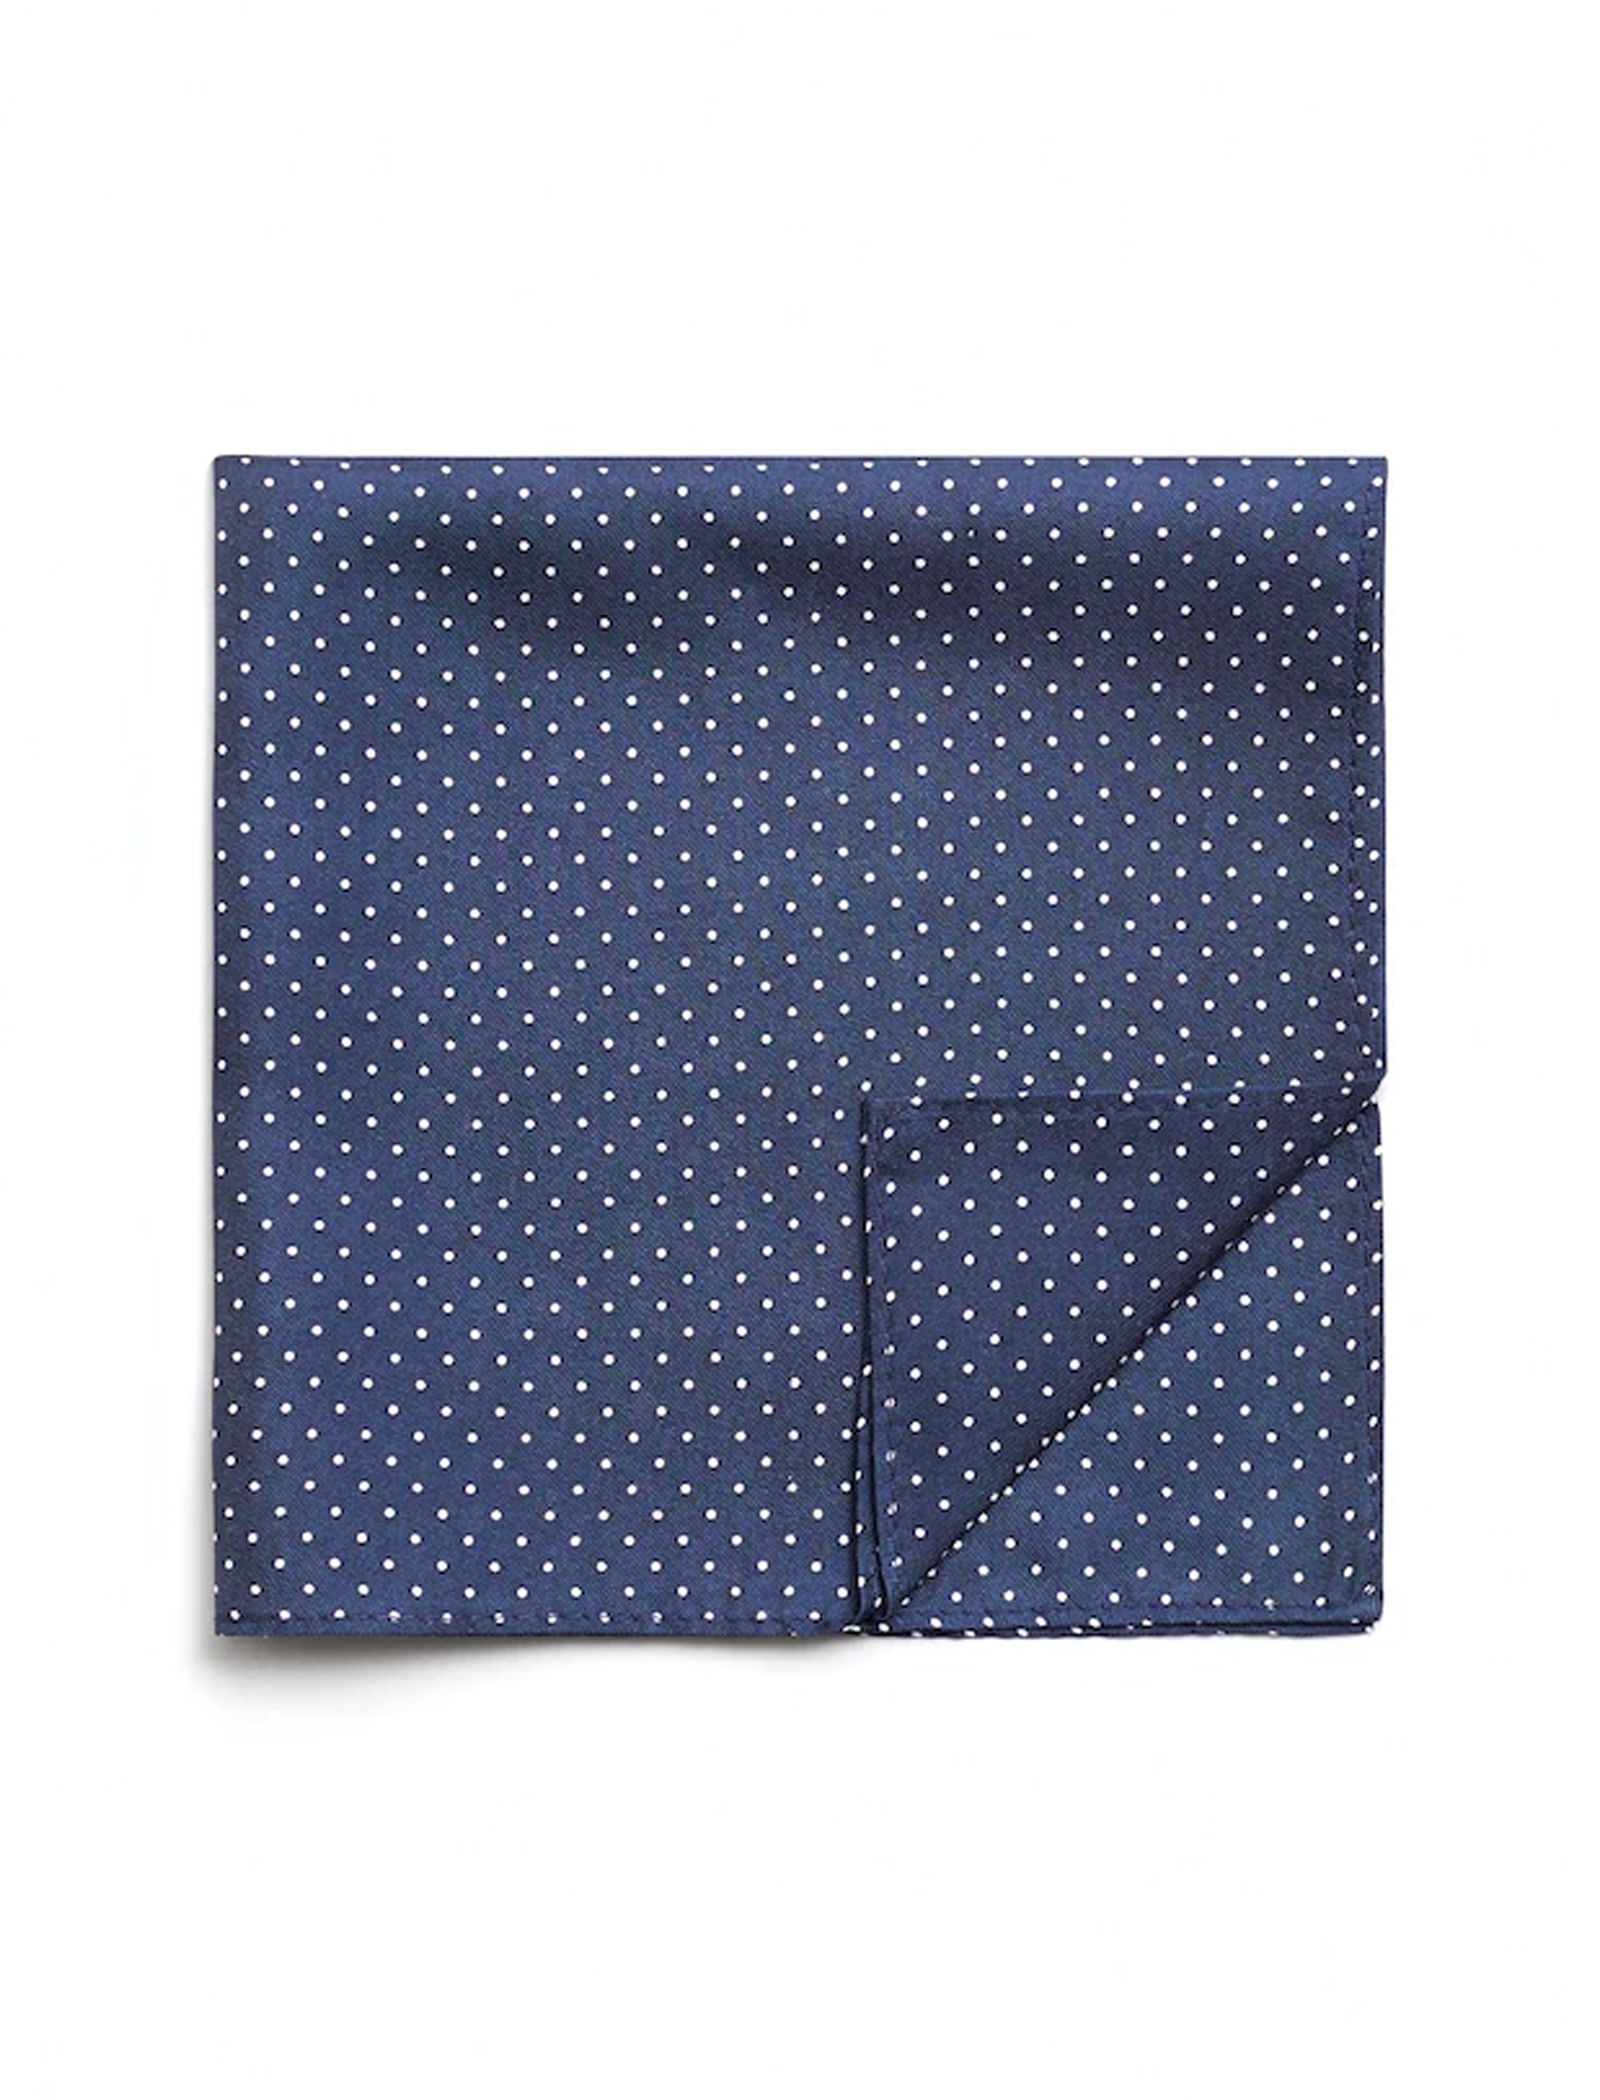 دستمال جیب ابریشم طرح دار مردانه - مانگو - سرمه اي - 2